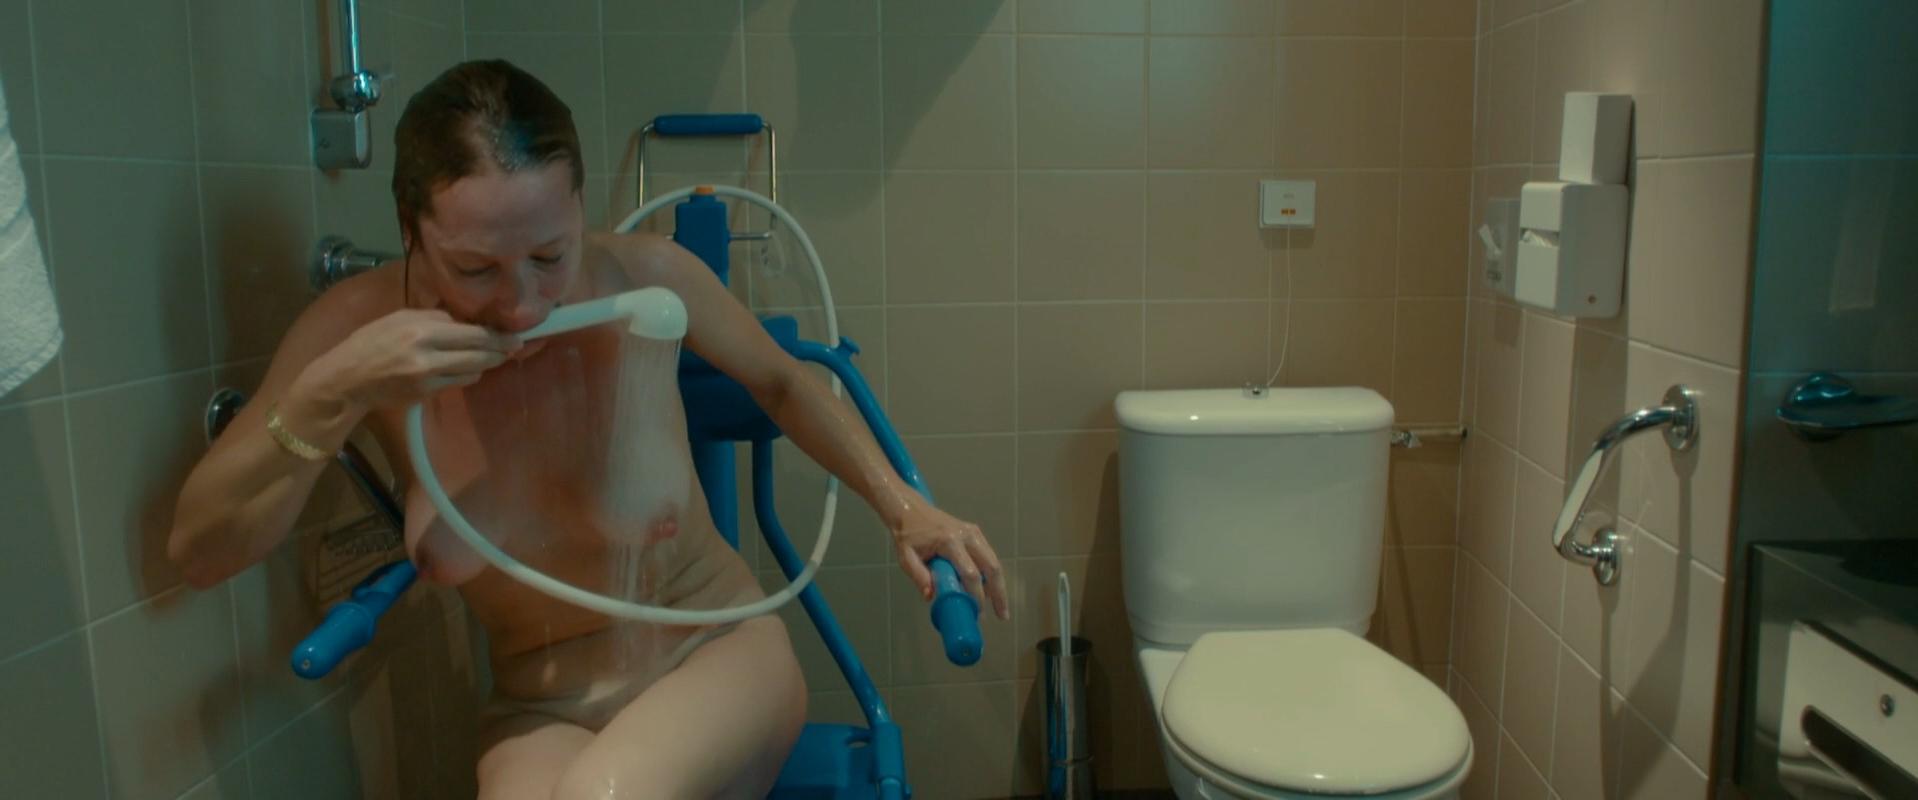 Emmanuelle Bercot nude - Mon roi (2015)